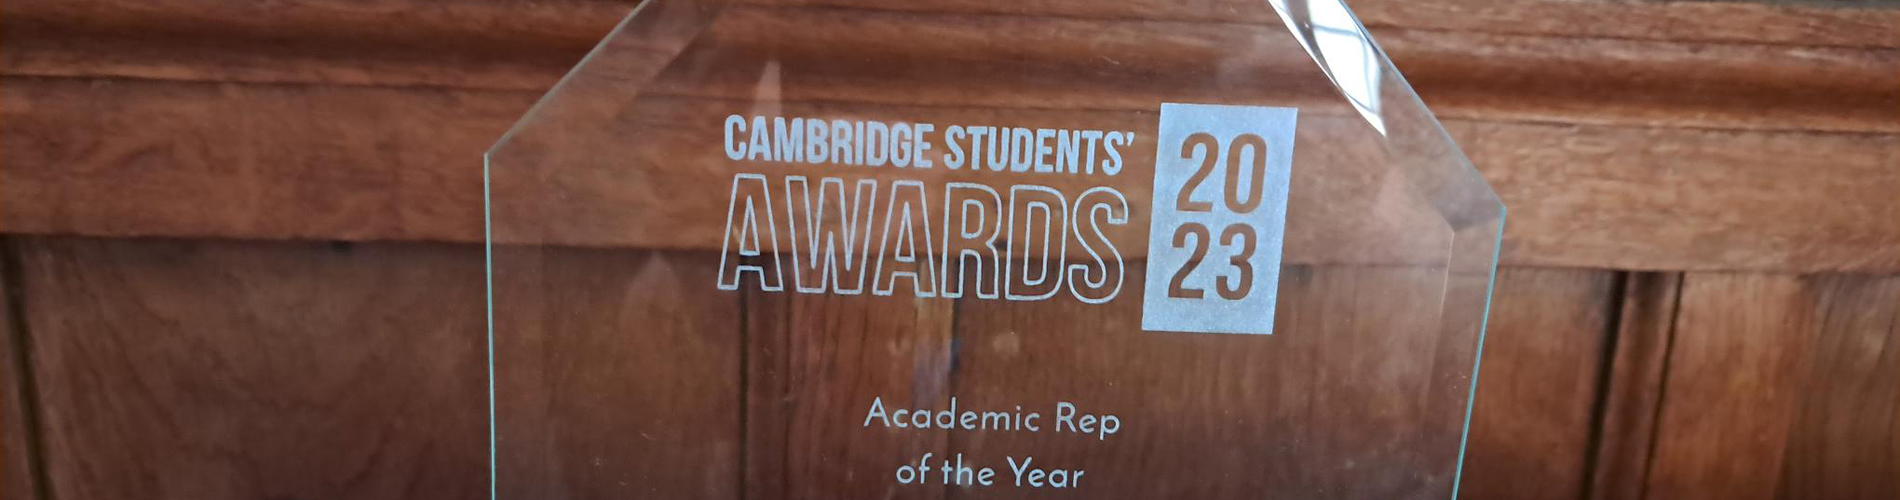 Cambridge Students' Awards